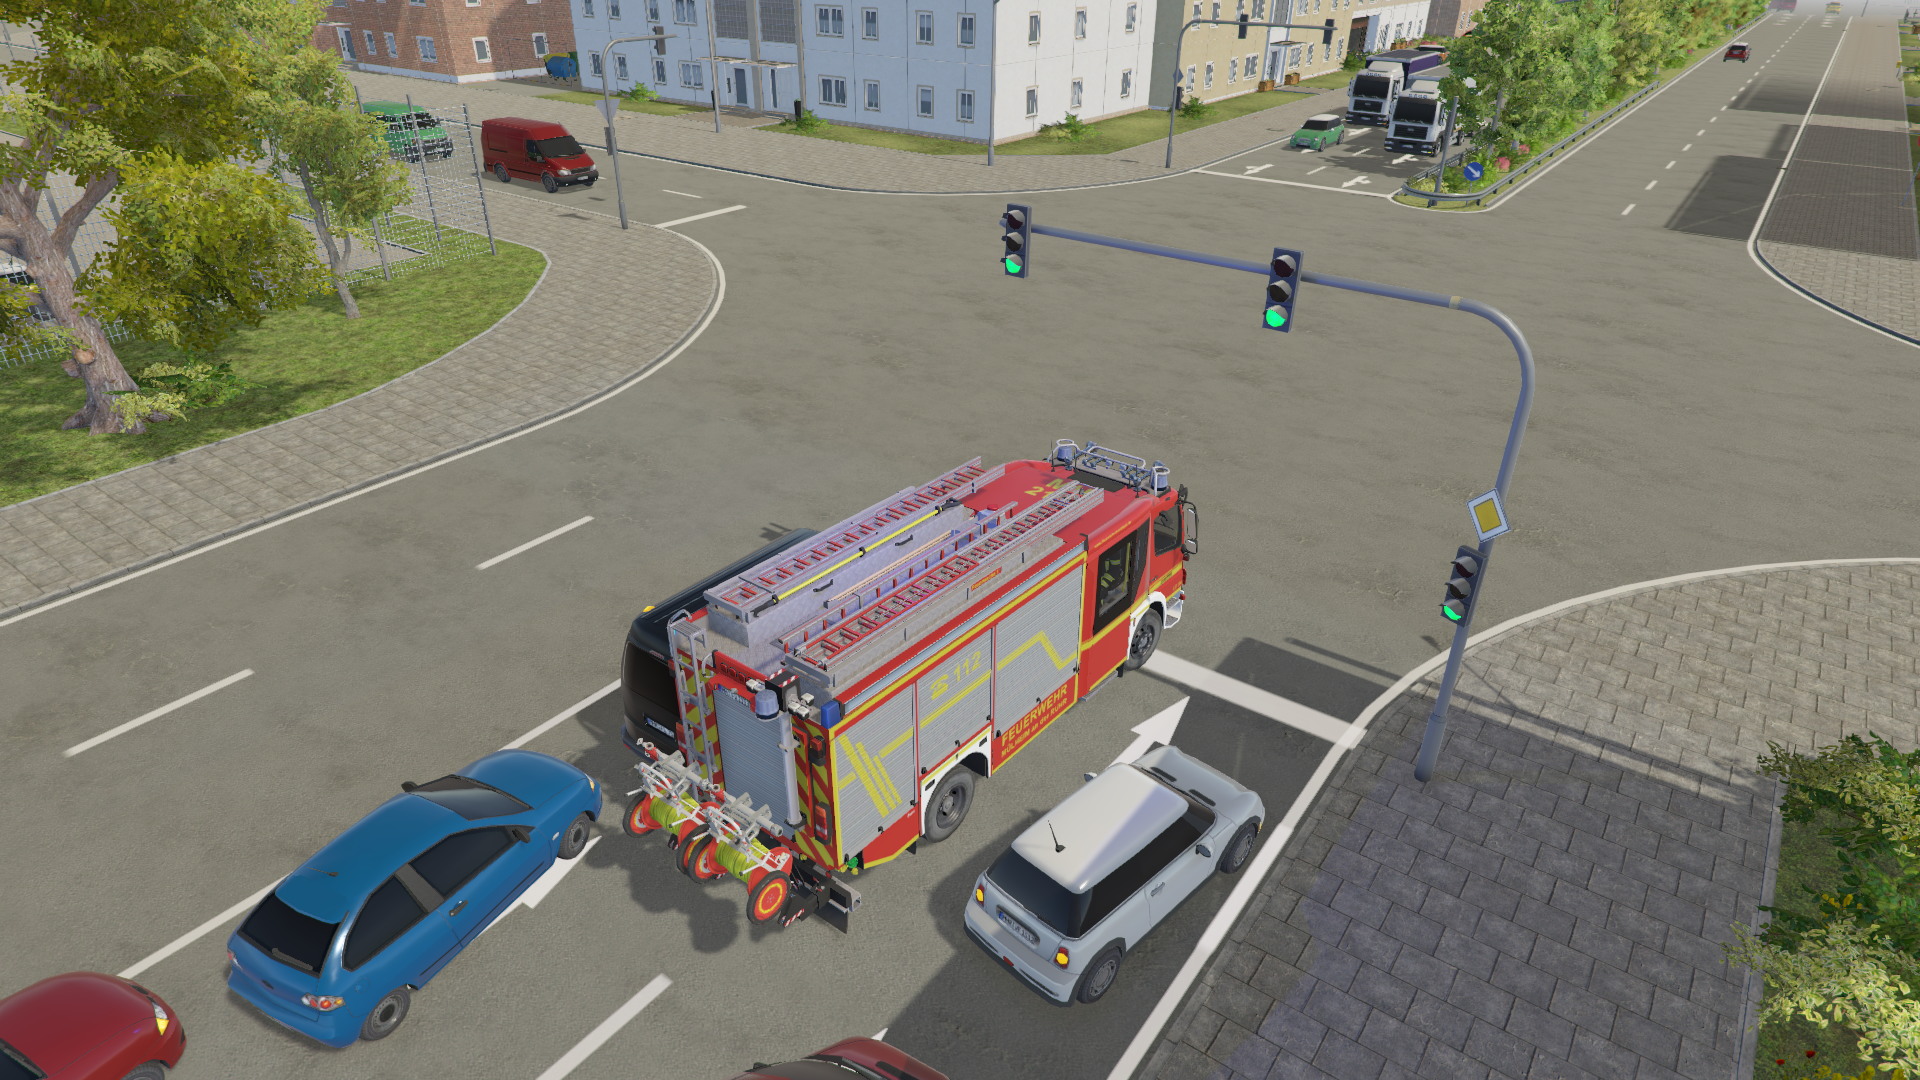 Emergency Call 112 - The Fire Fighting Simulation - screenshot 8